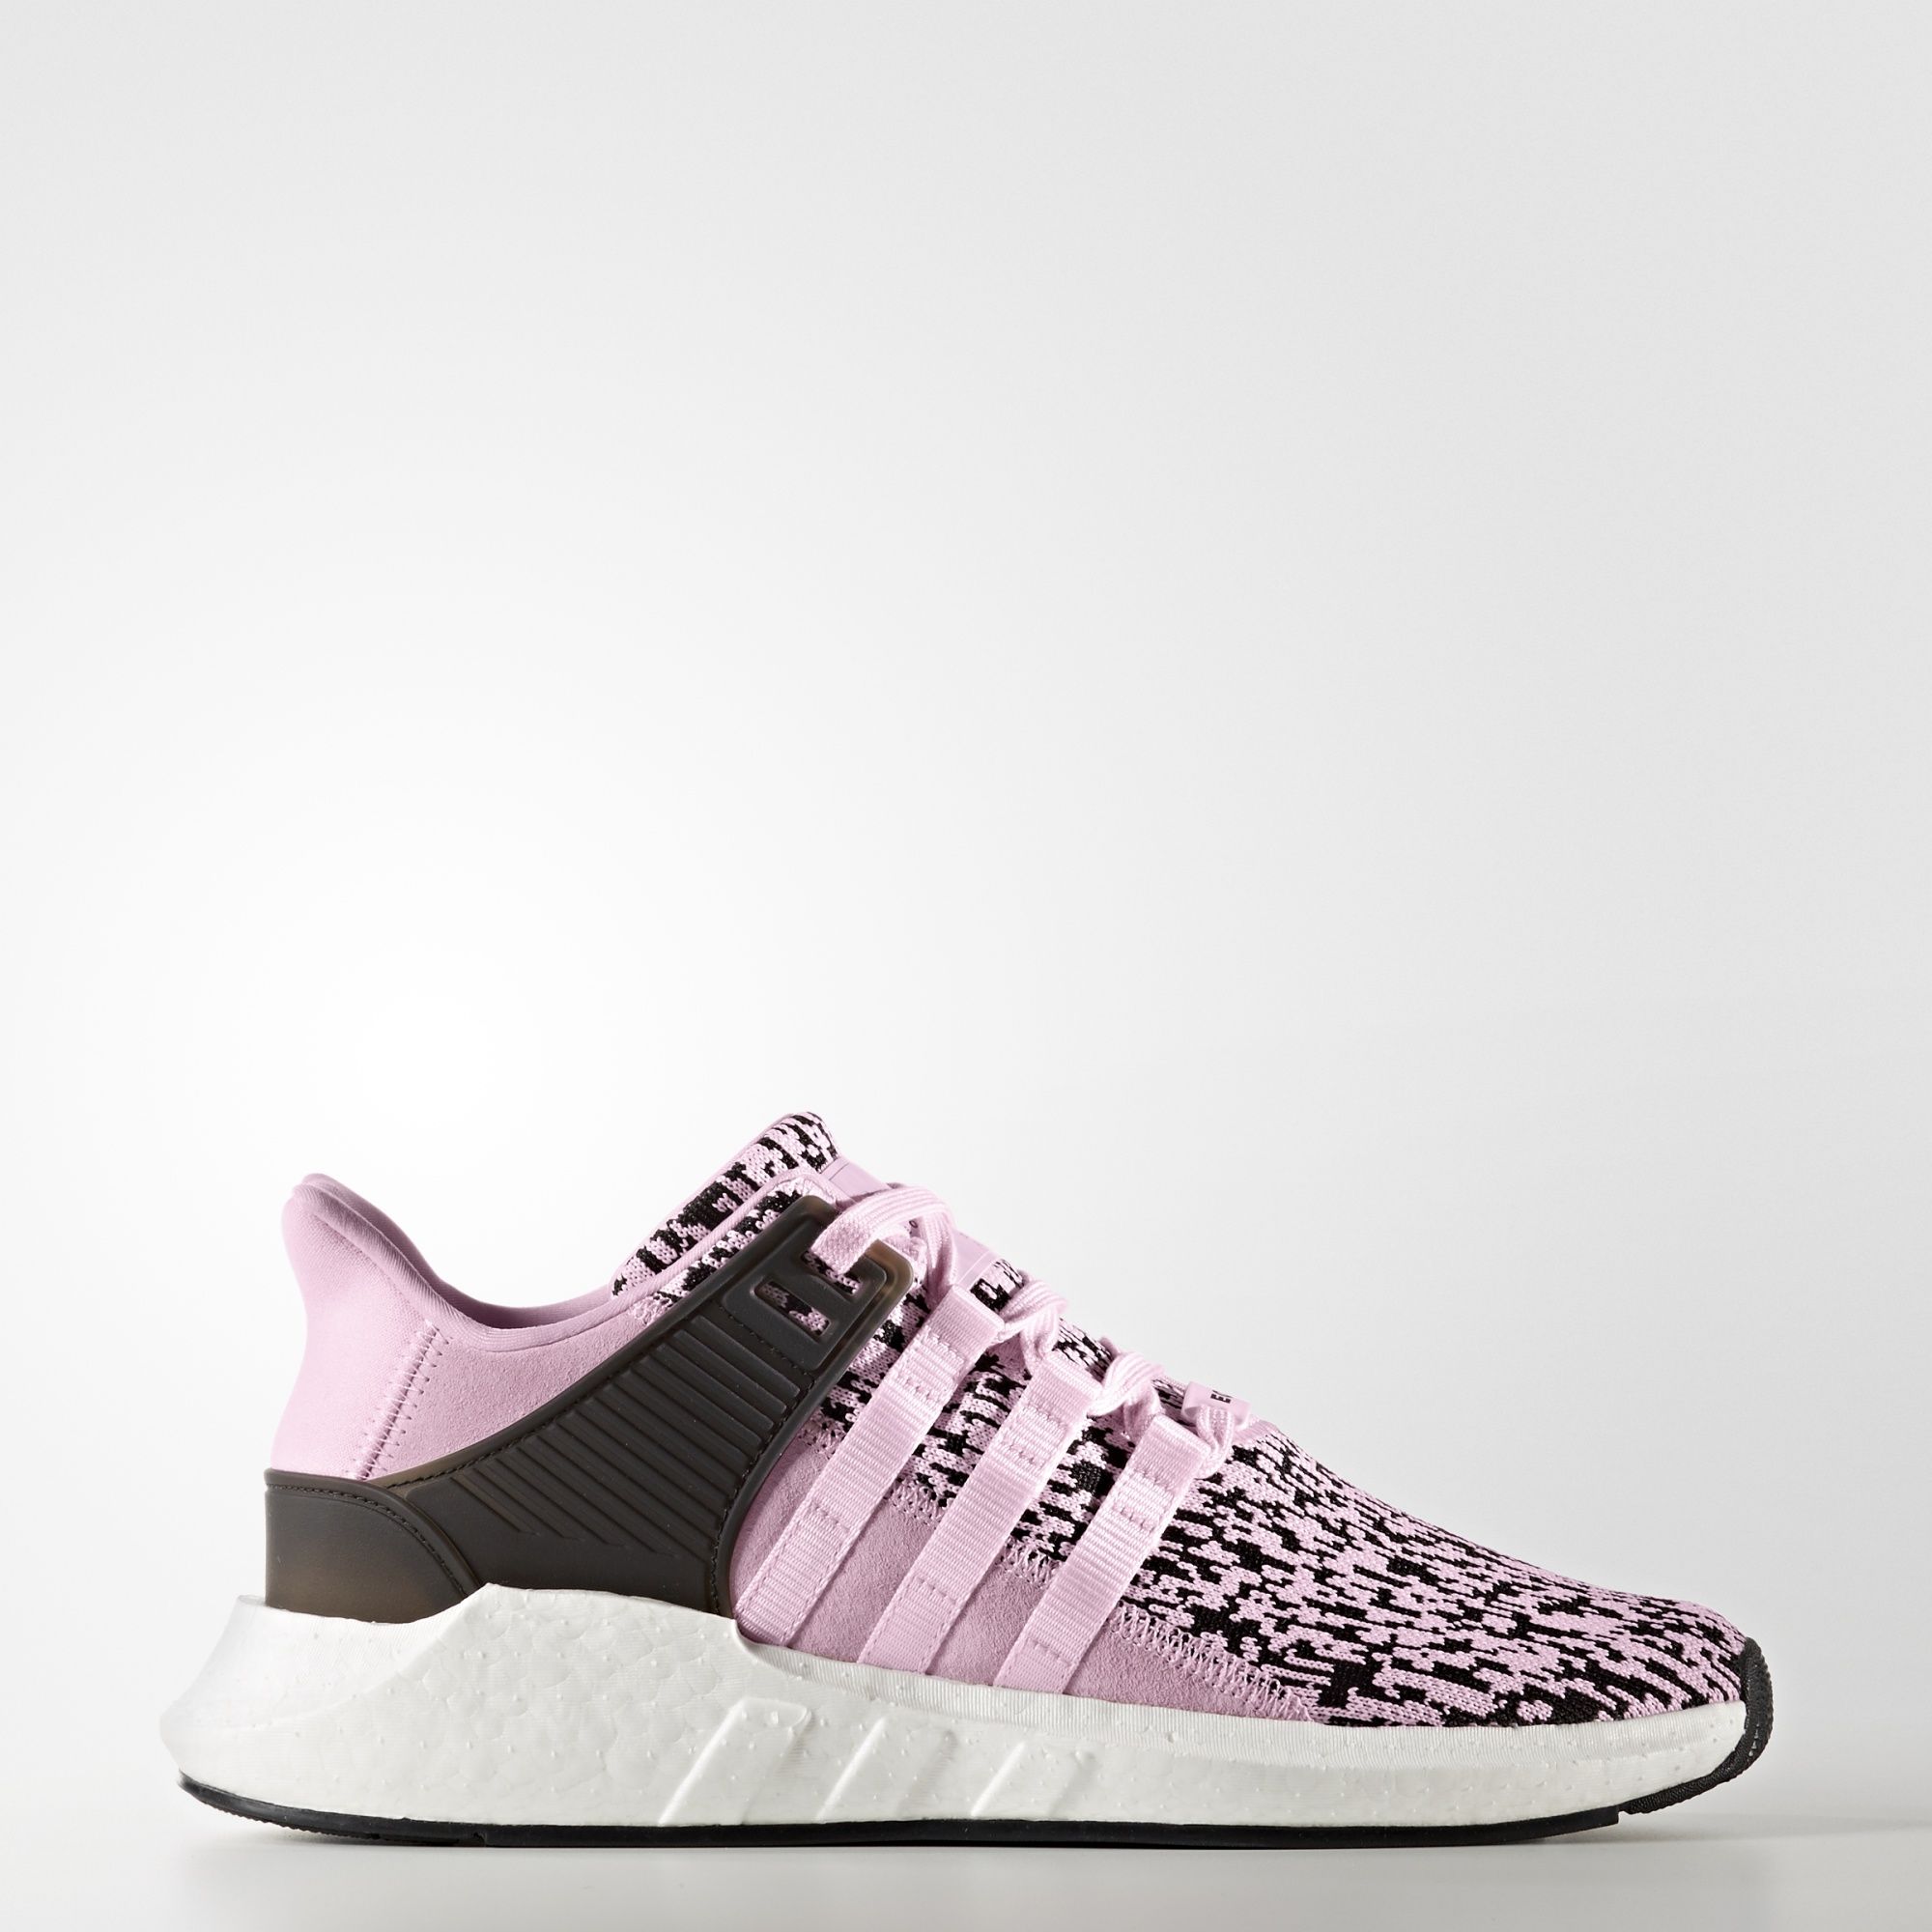 adidas-eqt-support-9317-wonder-pink-glitch-2